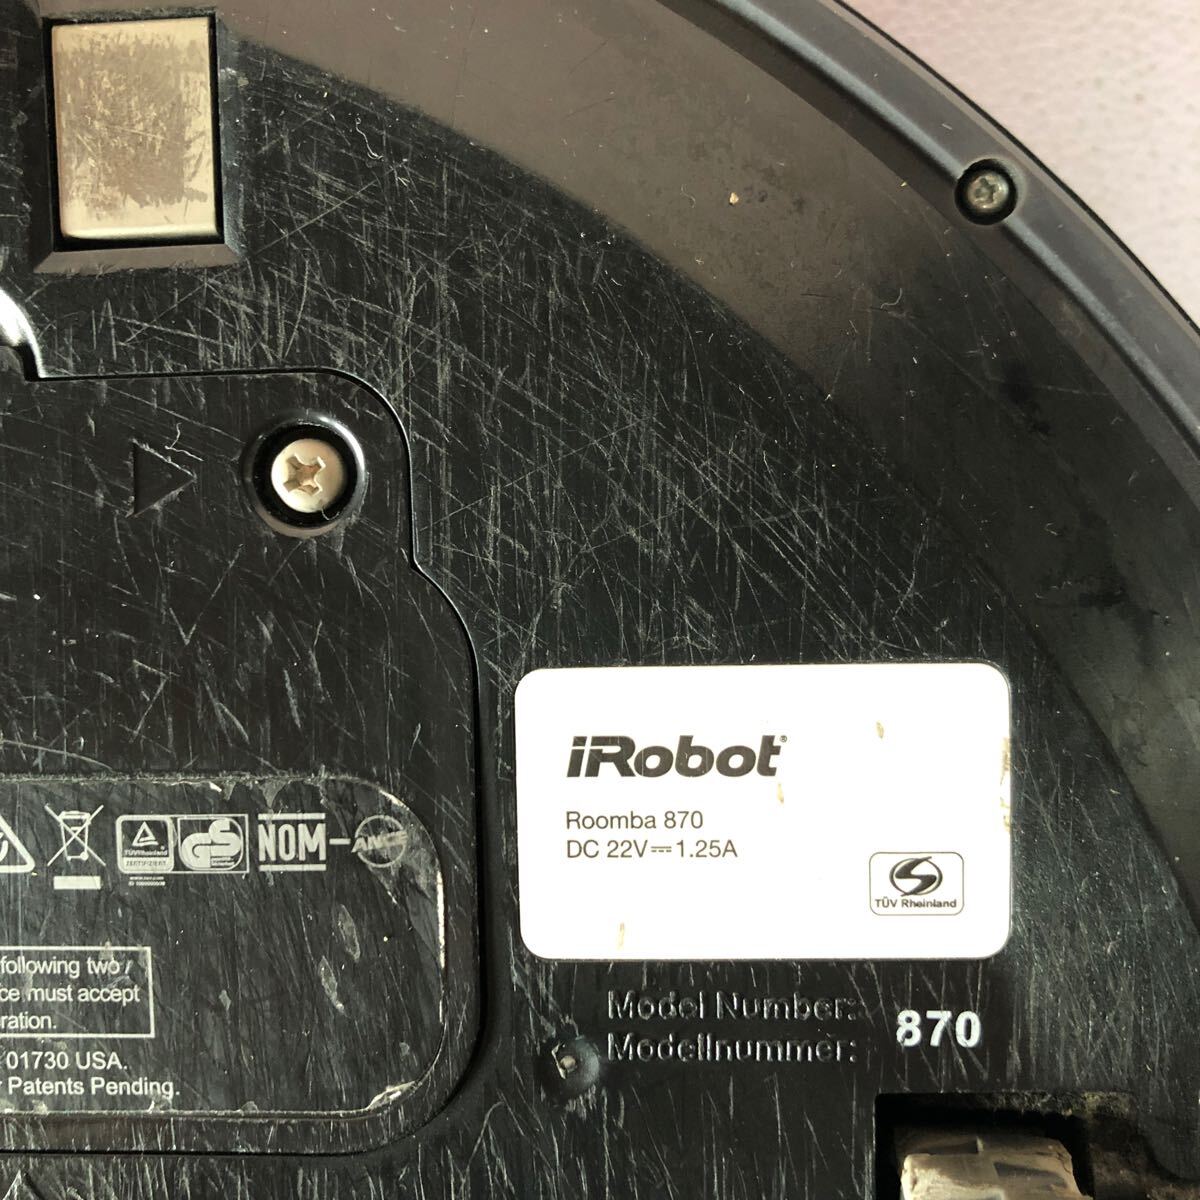 iRobot I robot Roomba roomba 870 robot cleaner operation not yet verification no check junk 